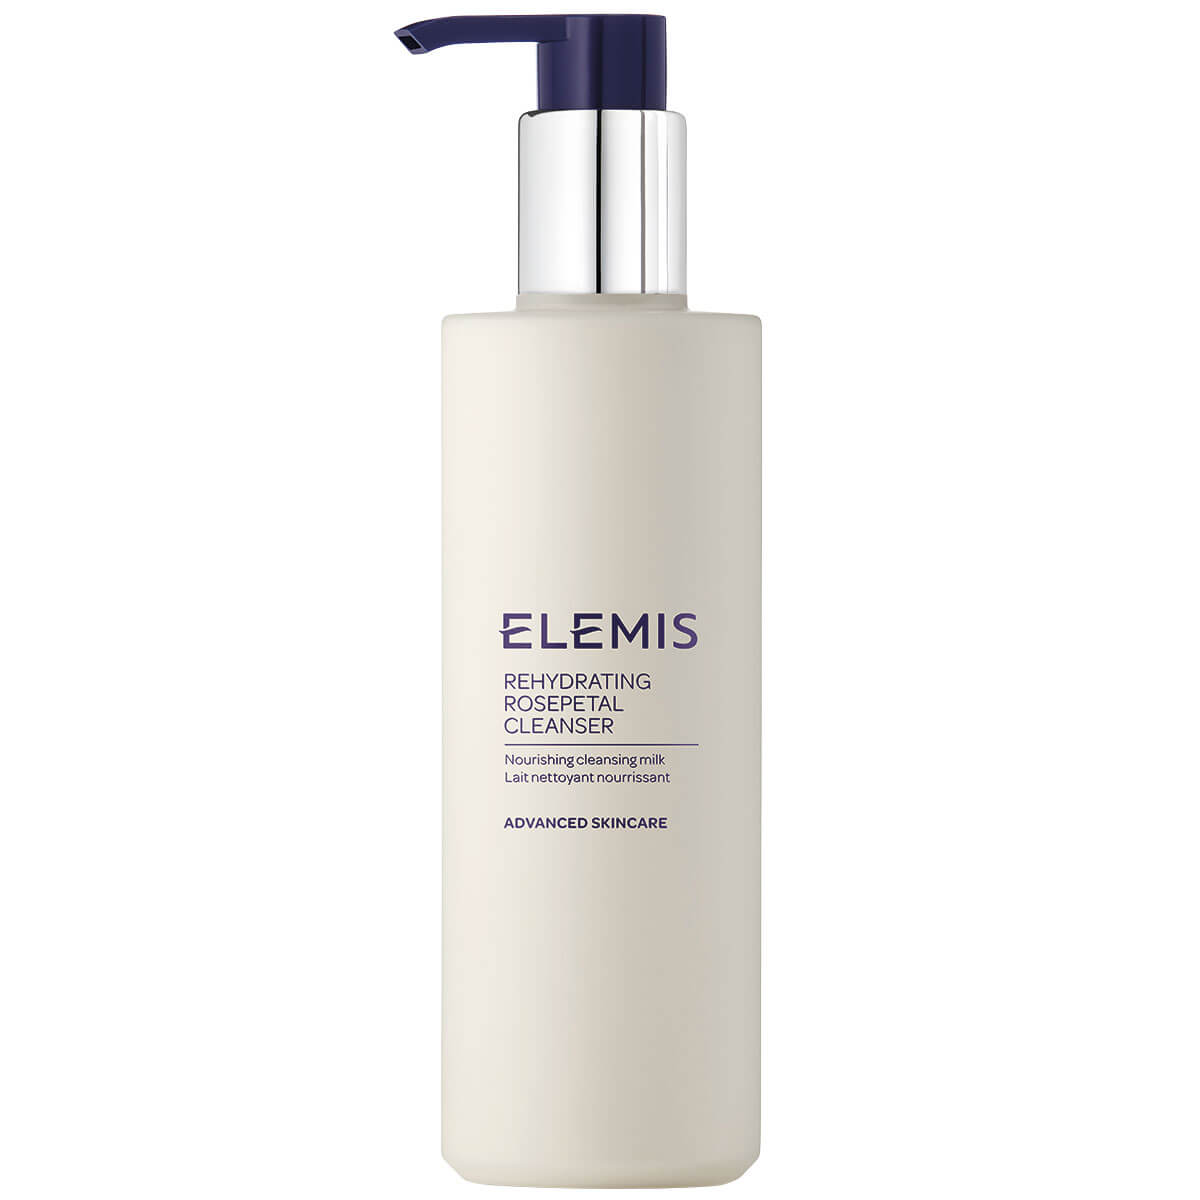 ELEMIS Rehydrating Rosepetal Cleanser